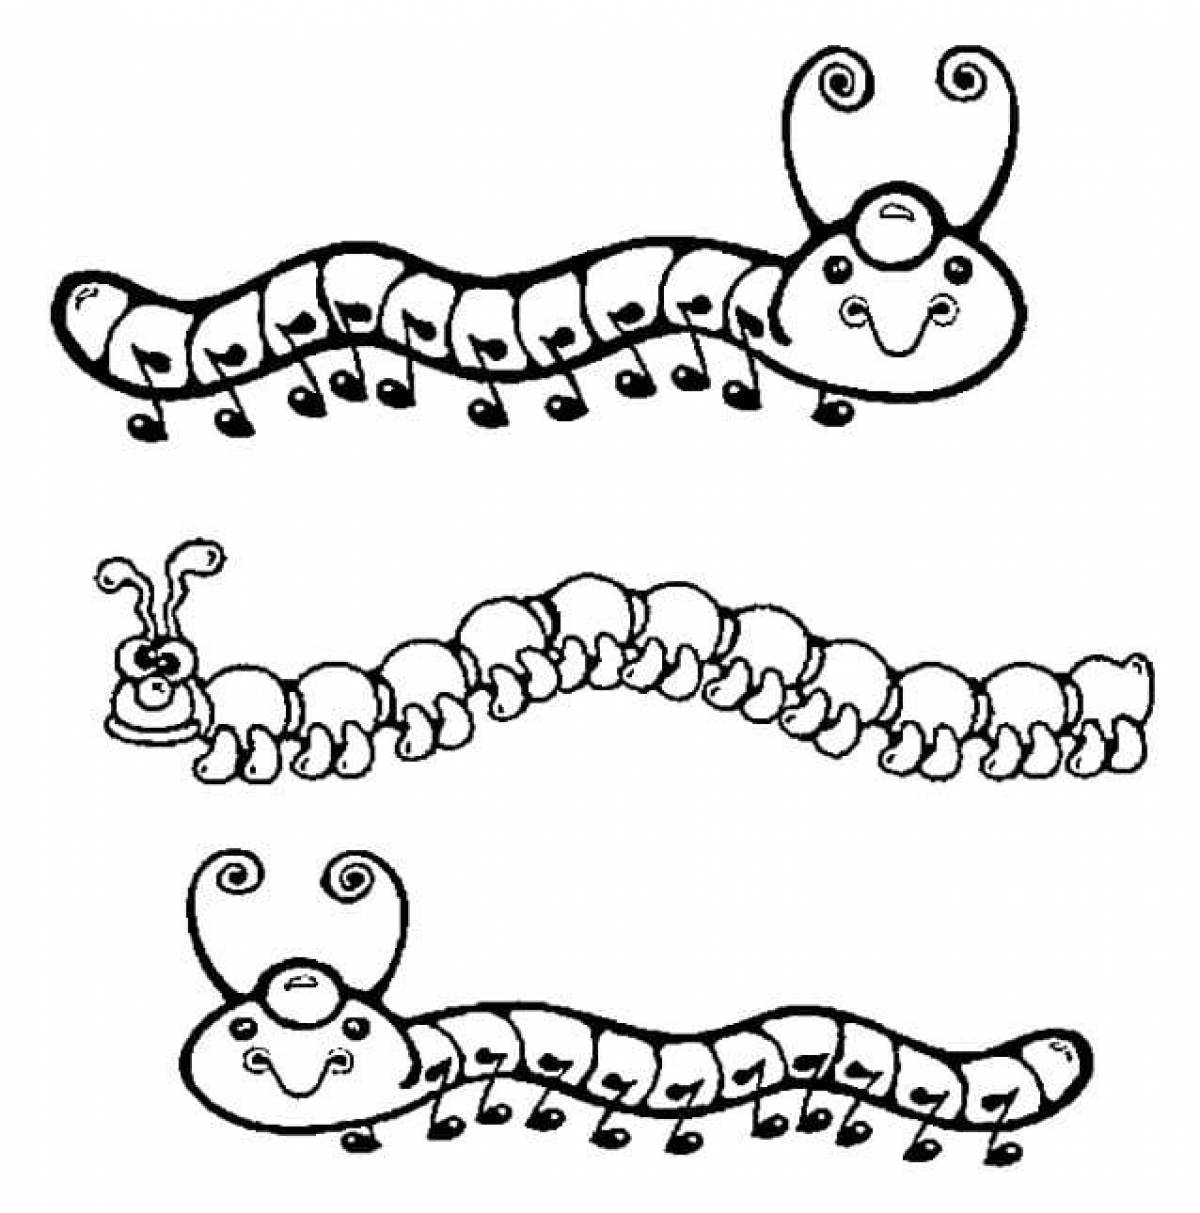 Great caterpillar coloring book for kids